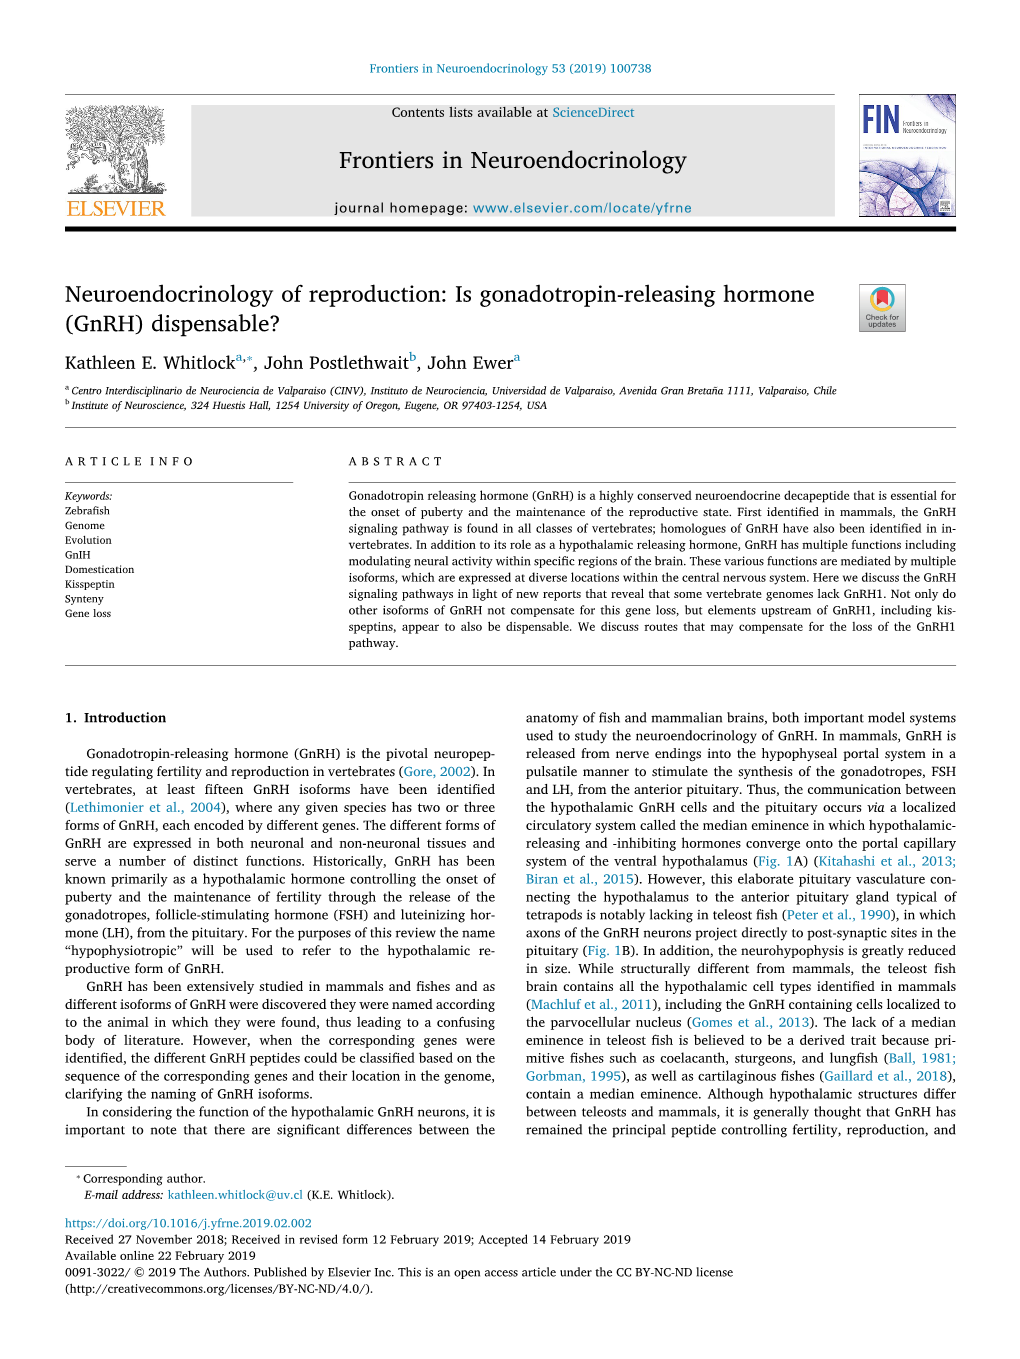 Neuroendocrinology of Reproduction Is Gonadotropin-Releasing Hormone